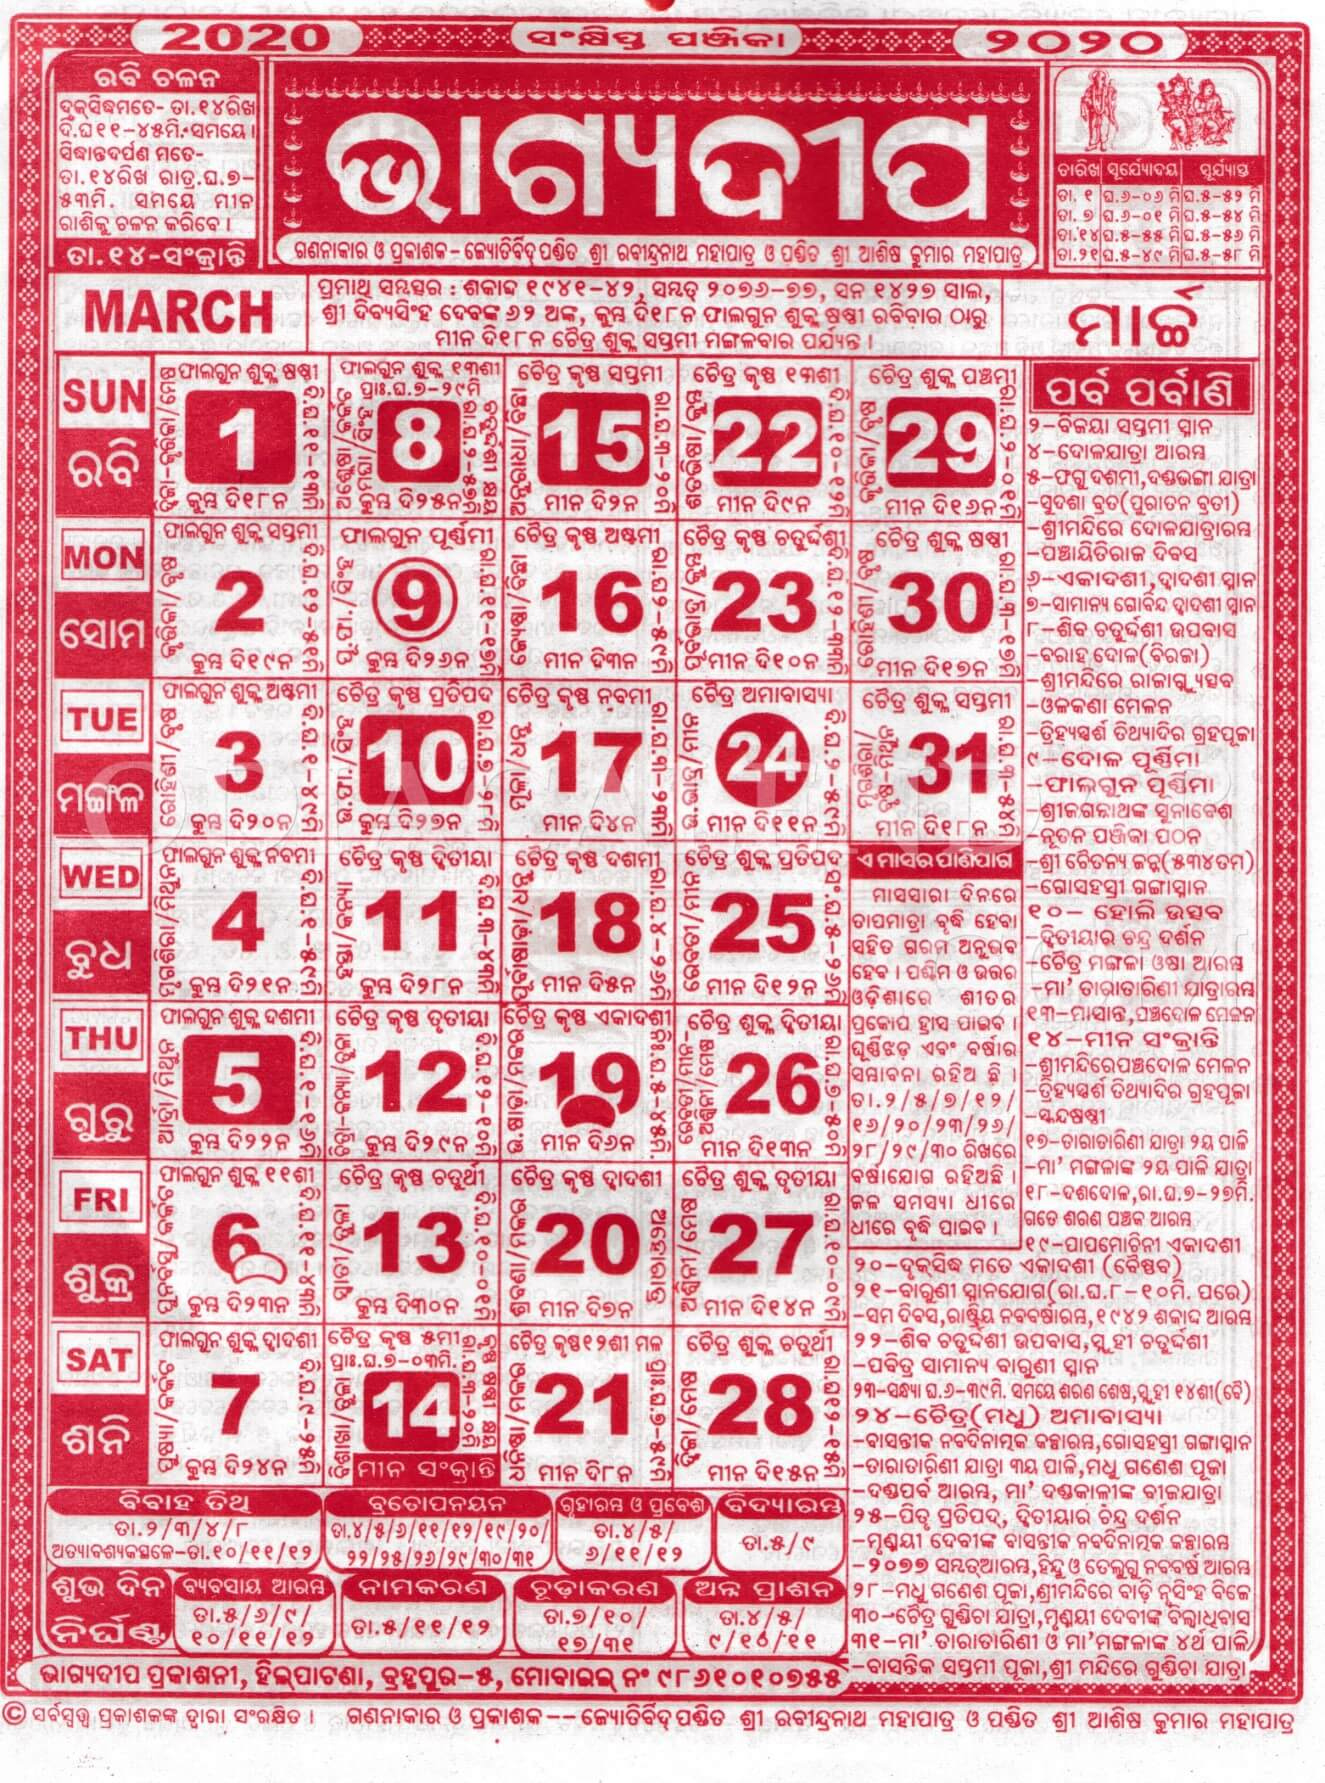 Bhagyadeep Odia Calendar March 2020 - Download Hd Quality Odia Calendar 2021 November